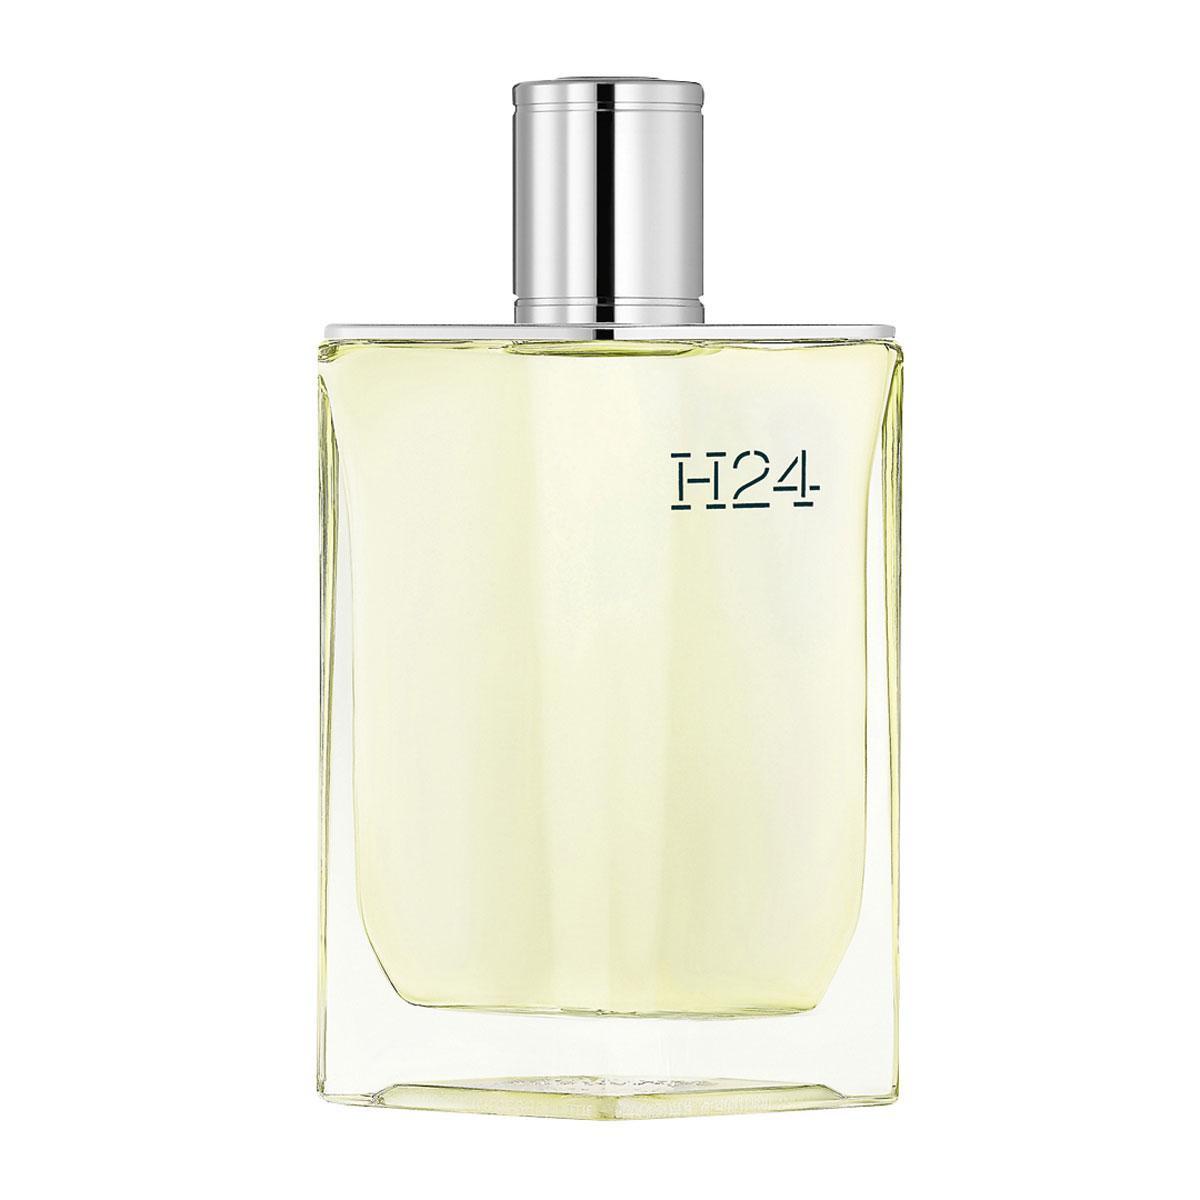 Een parfum met scharlei, toetsen van hooi en versgemaaid gras, op basis van amber. H24 van Hermès, 105 euro, 100 ml, navulbare flacon, in de parfumerie en op hermes.com